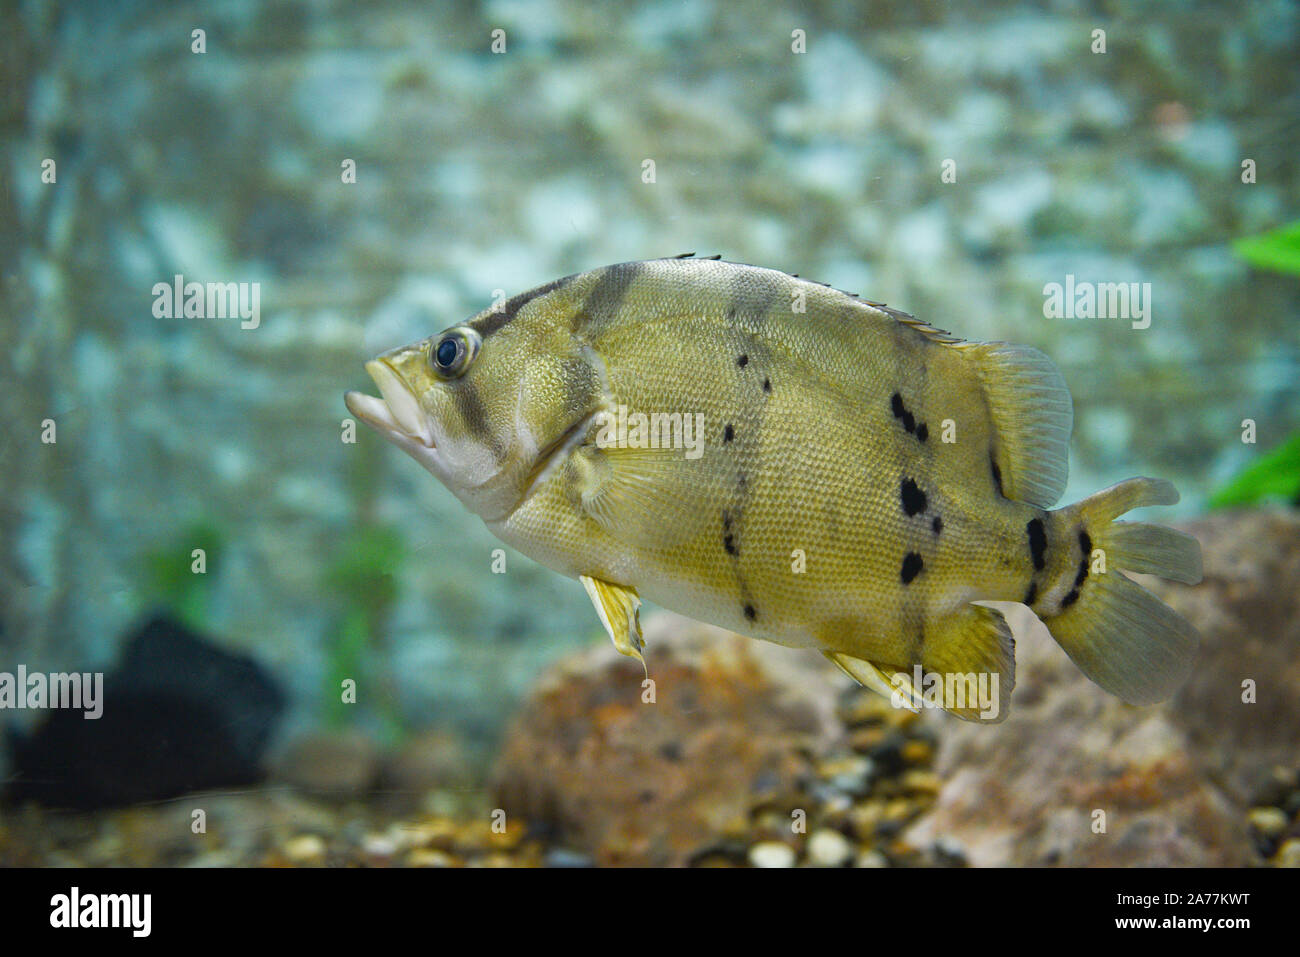 Siamese tiger fish swimming underwater fish tank at aquarium / Fish tiger Stock Photo